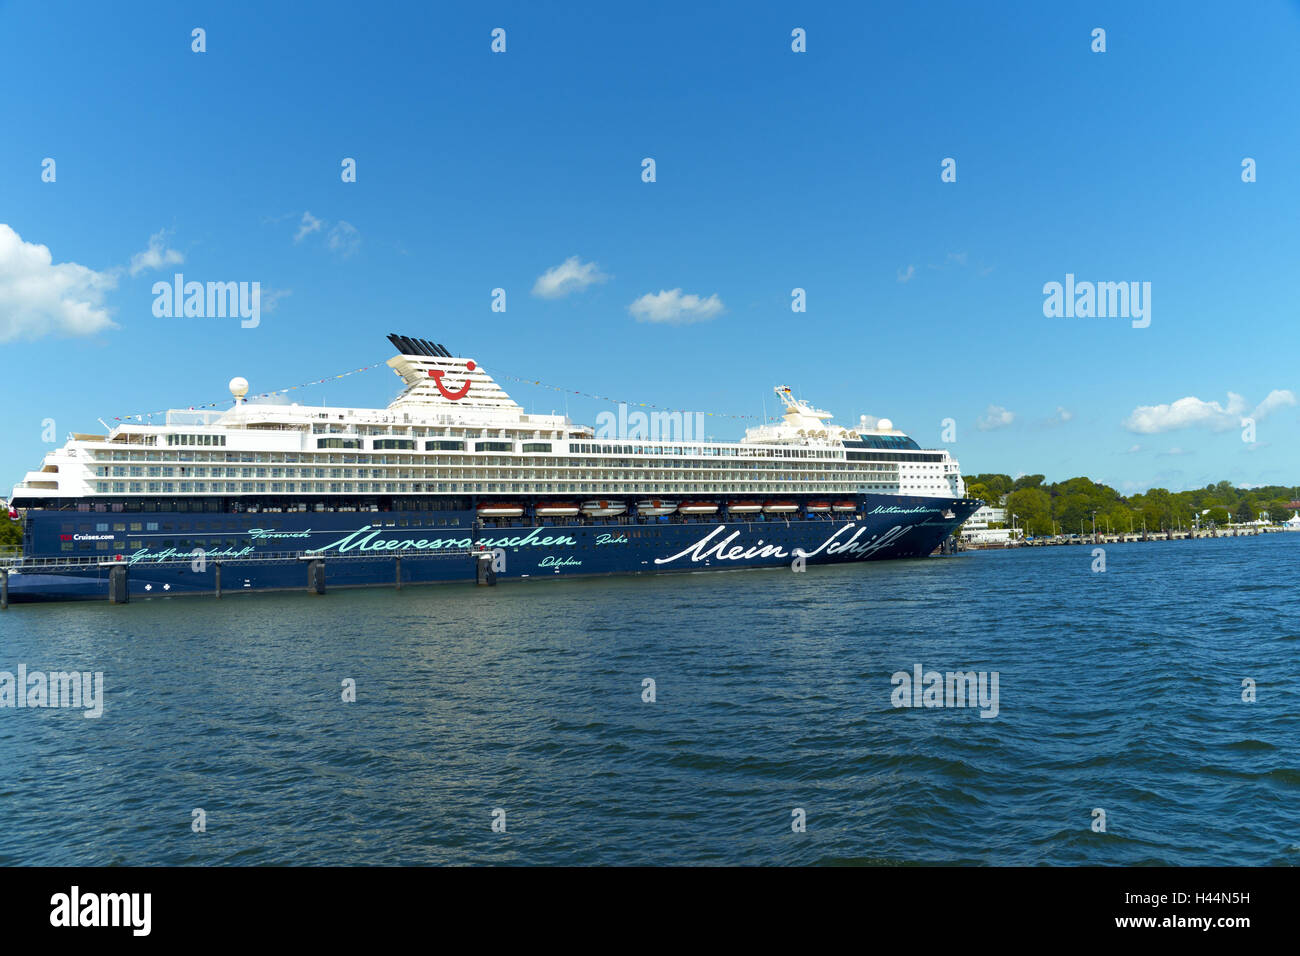 Deutschland, Schleswig - Holstein, Kiel, Oslo Kai, Kreuzfahrtschiff  Stockfotografie - Alamy